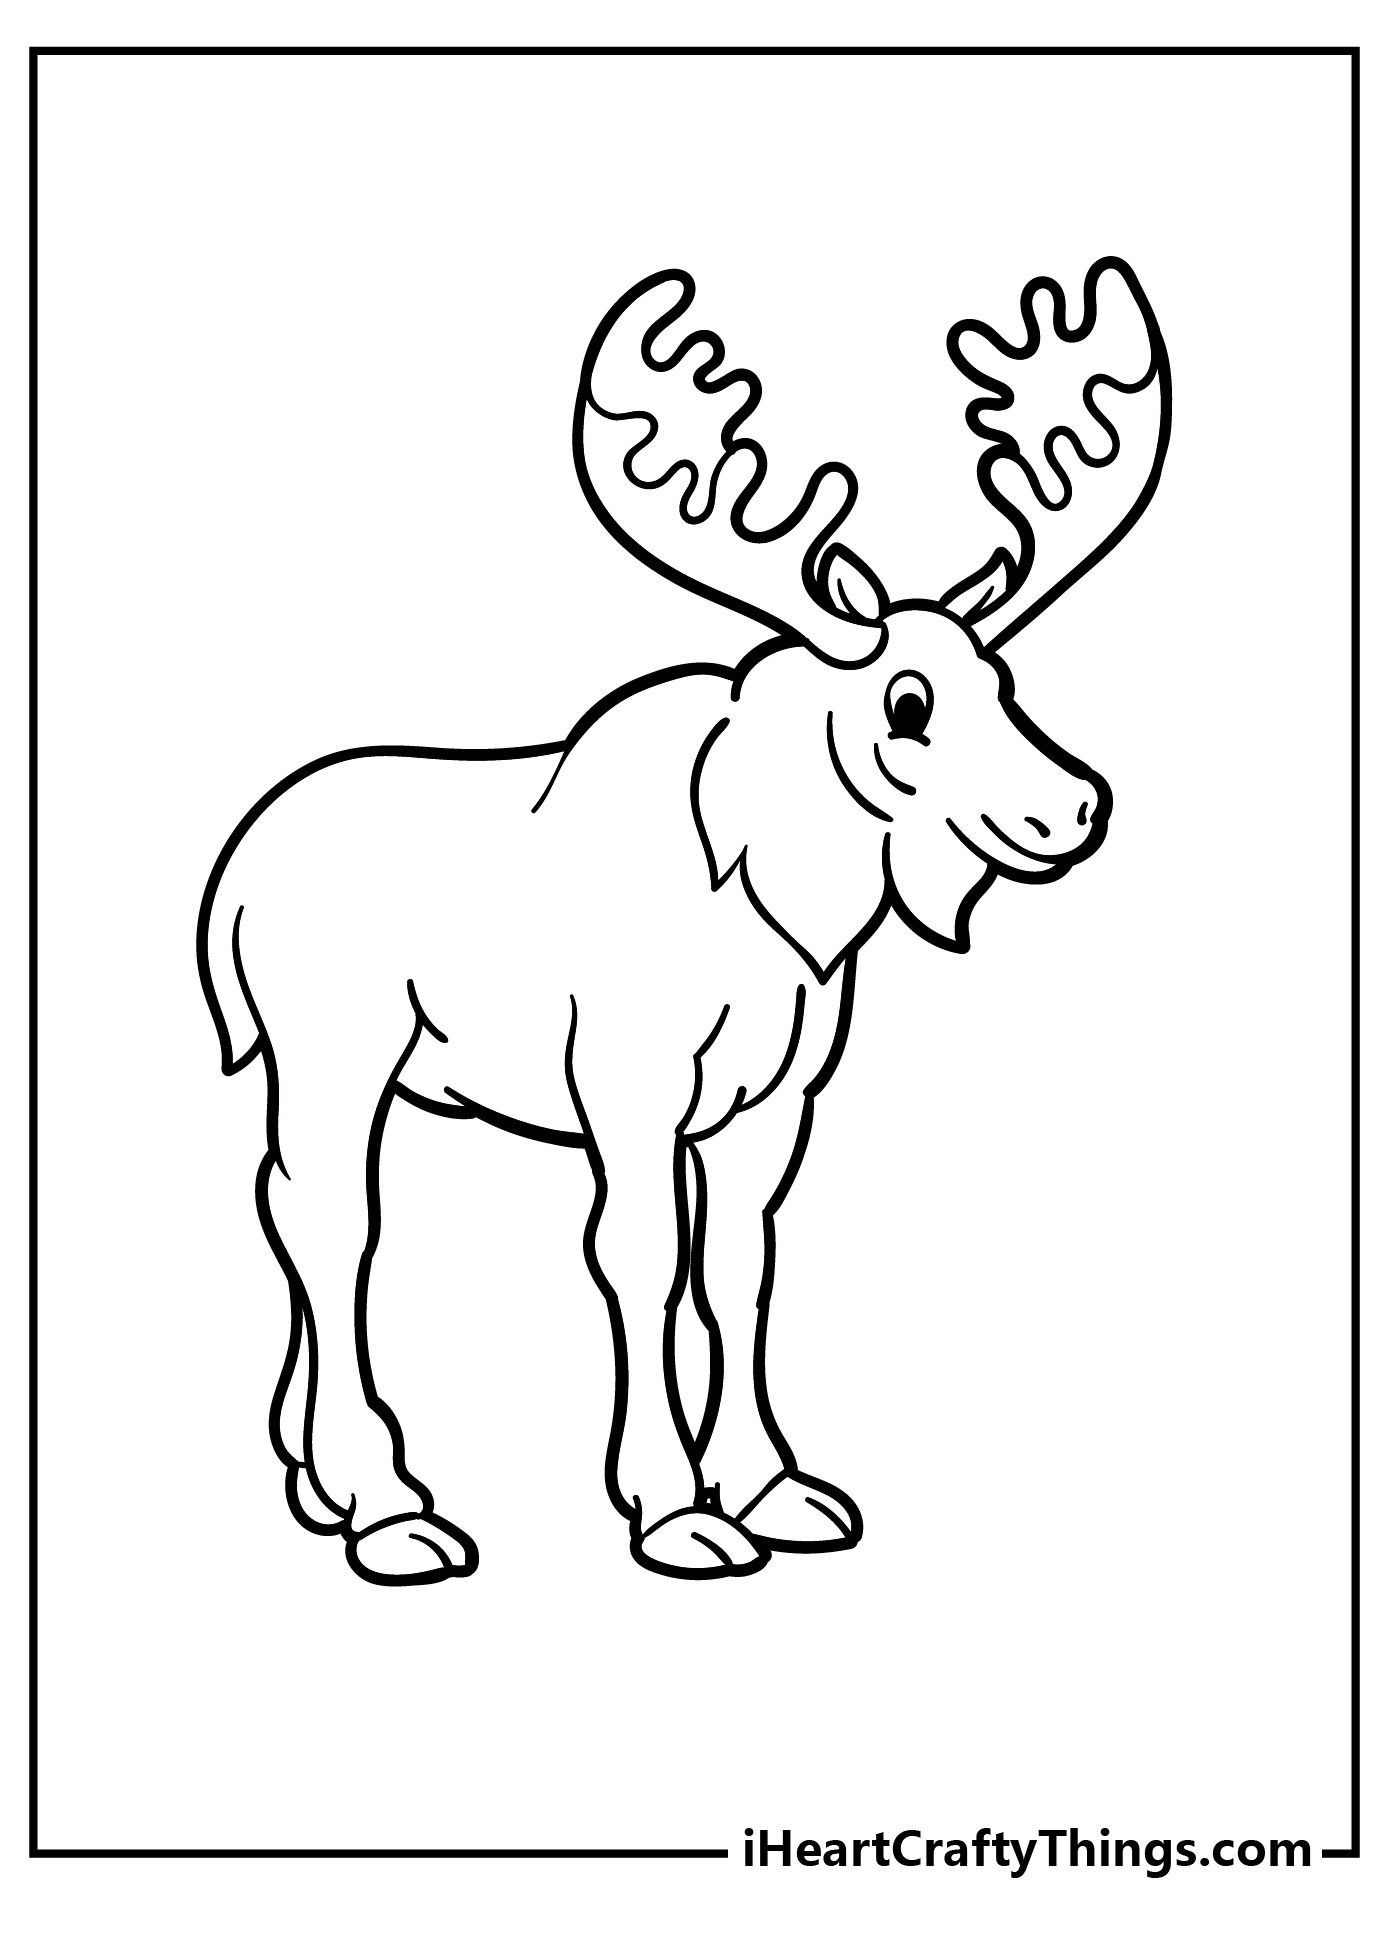 Moose Coloring Sheet for children free download